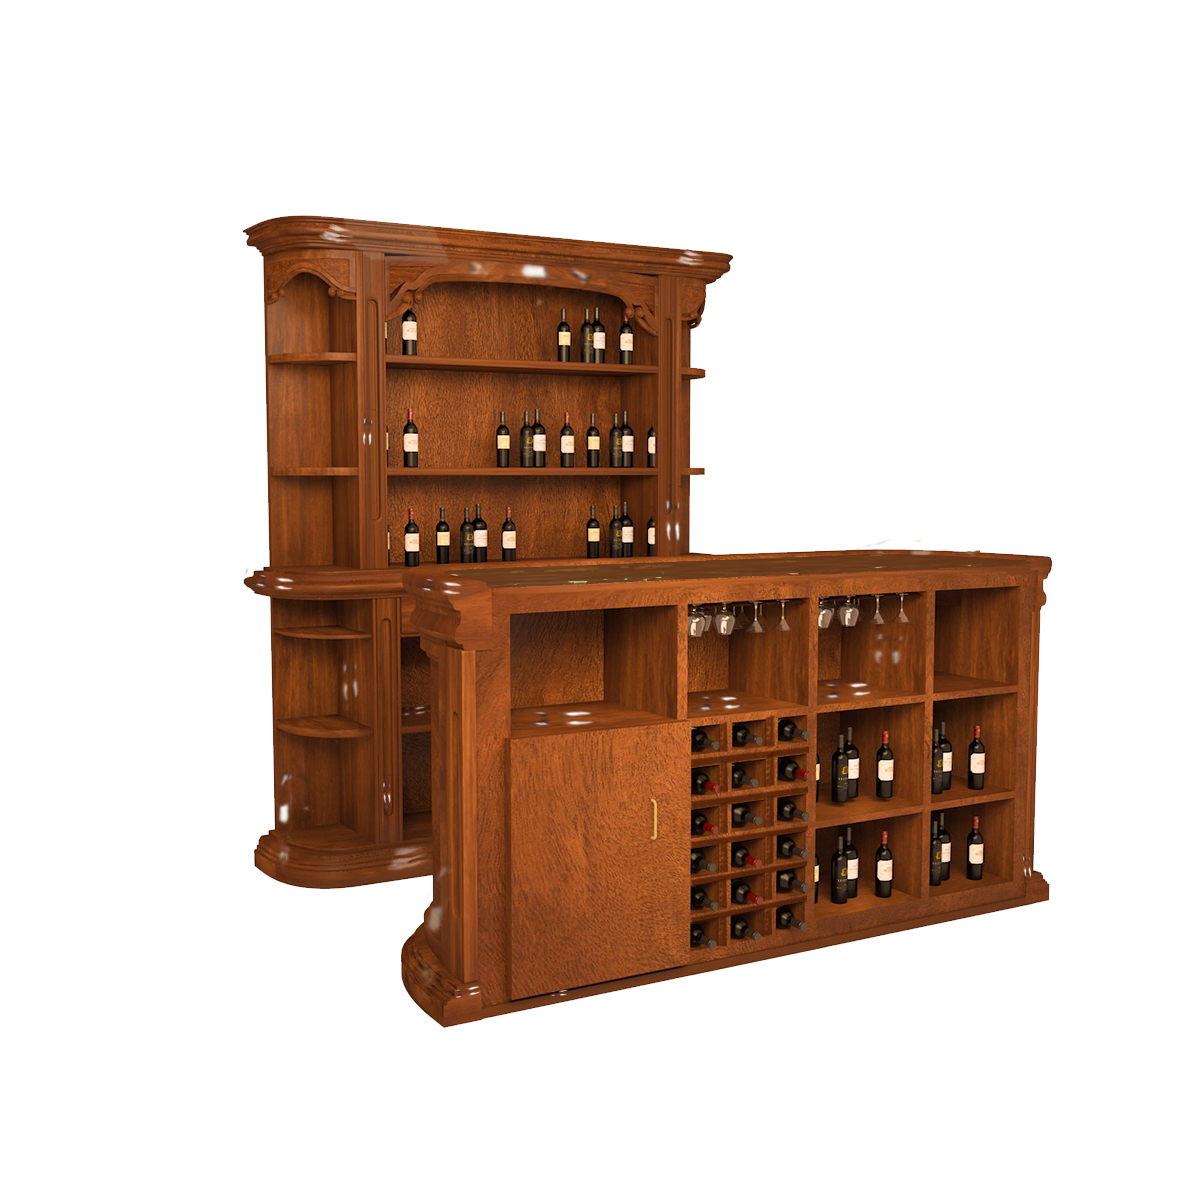 BarConic “Bar in A Box” – 15 Piece Martini Home Bar Set